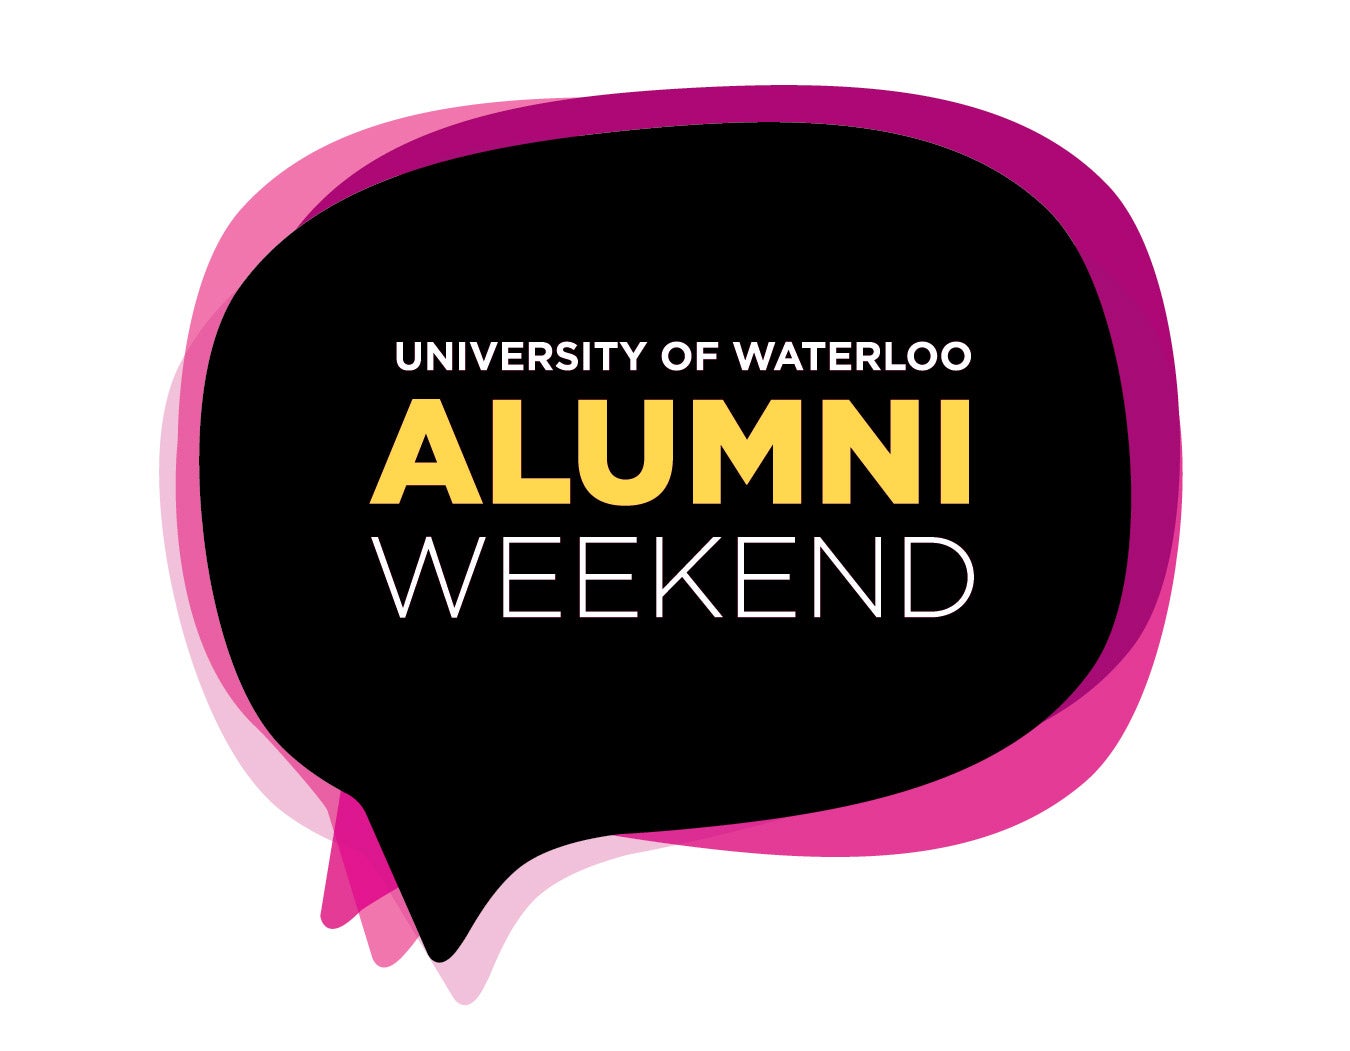 alumni weekend pink and black bubble